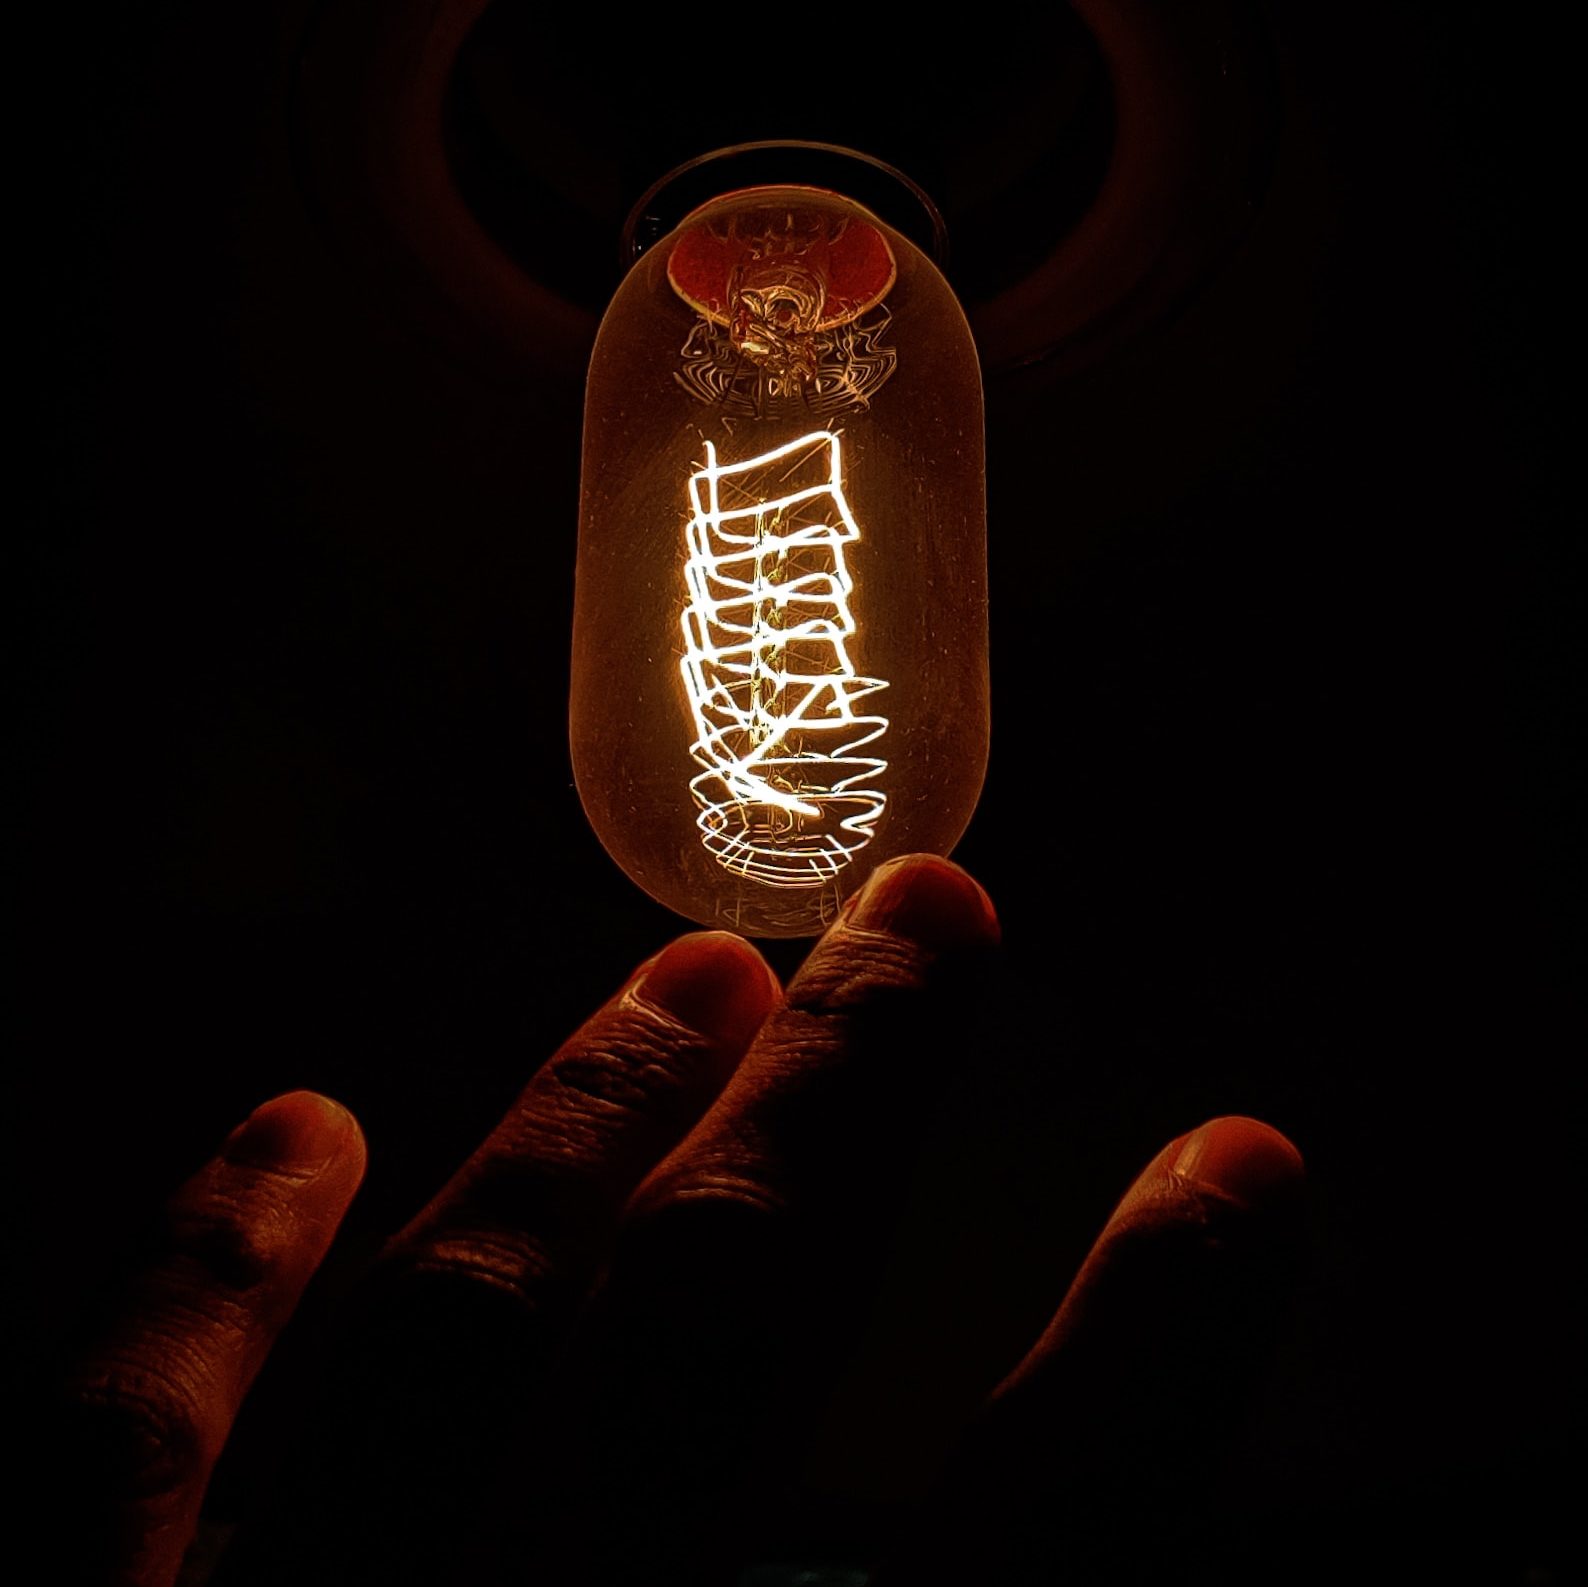 Tungsten light bulb